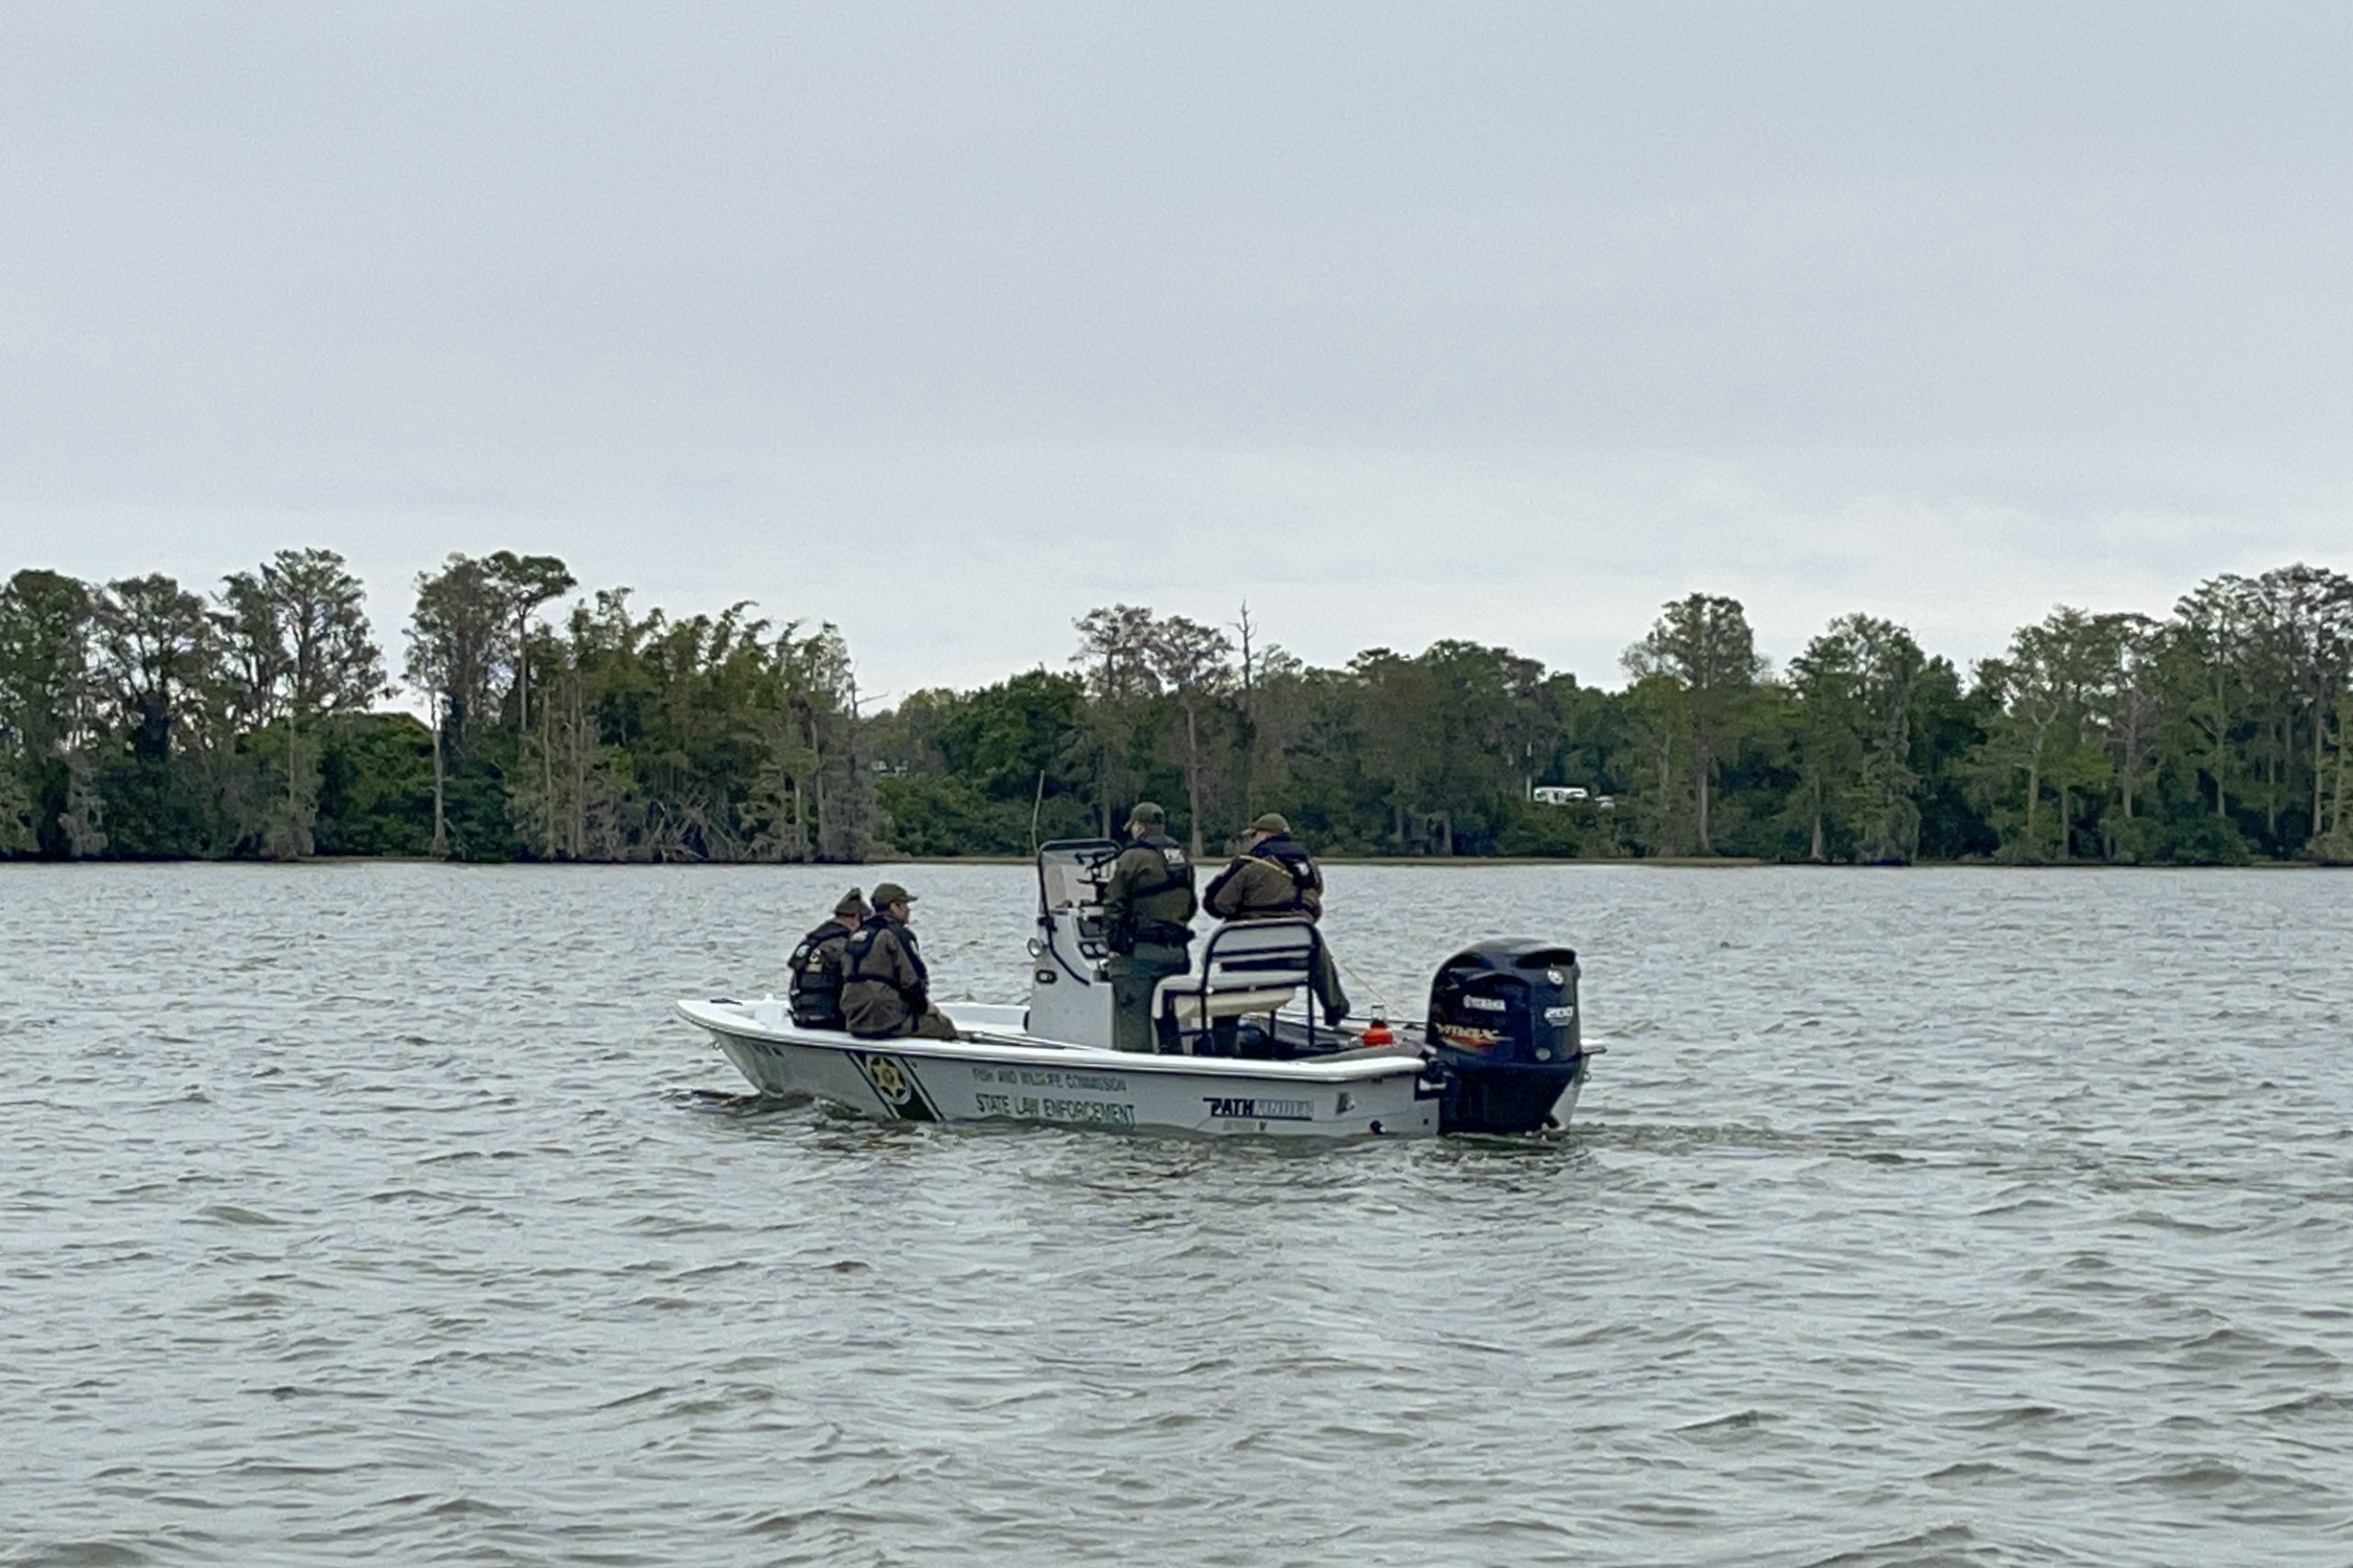 Bodies of two missing men found in central Florida lake - Washington ...